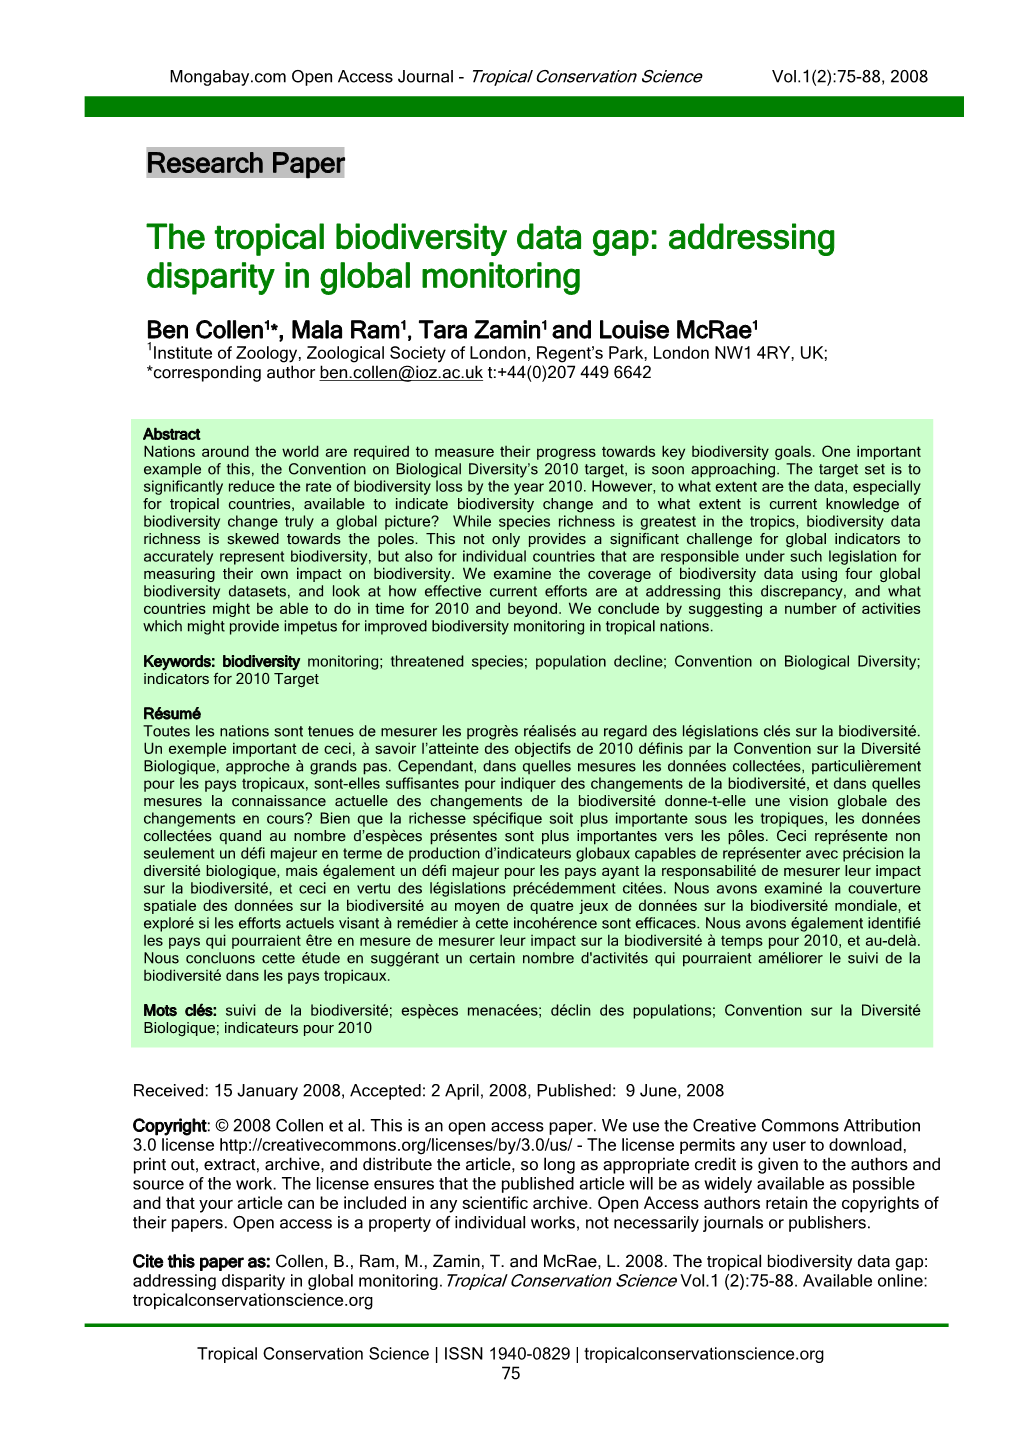 The Tropical Biodiversity Data Gap: Addressing Disparity in Global Monitoring